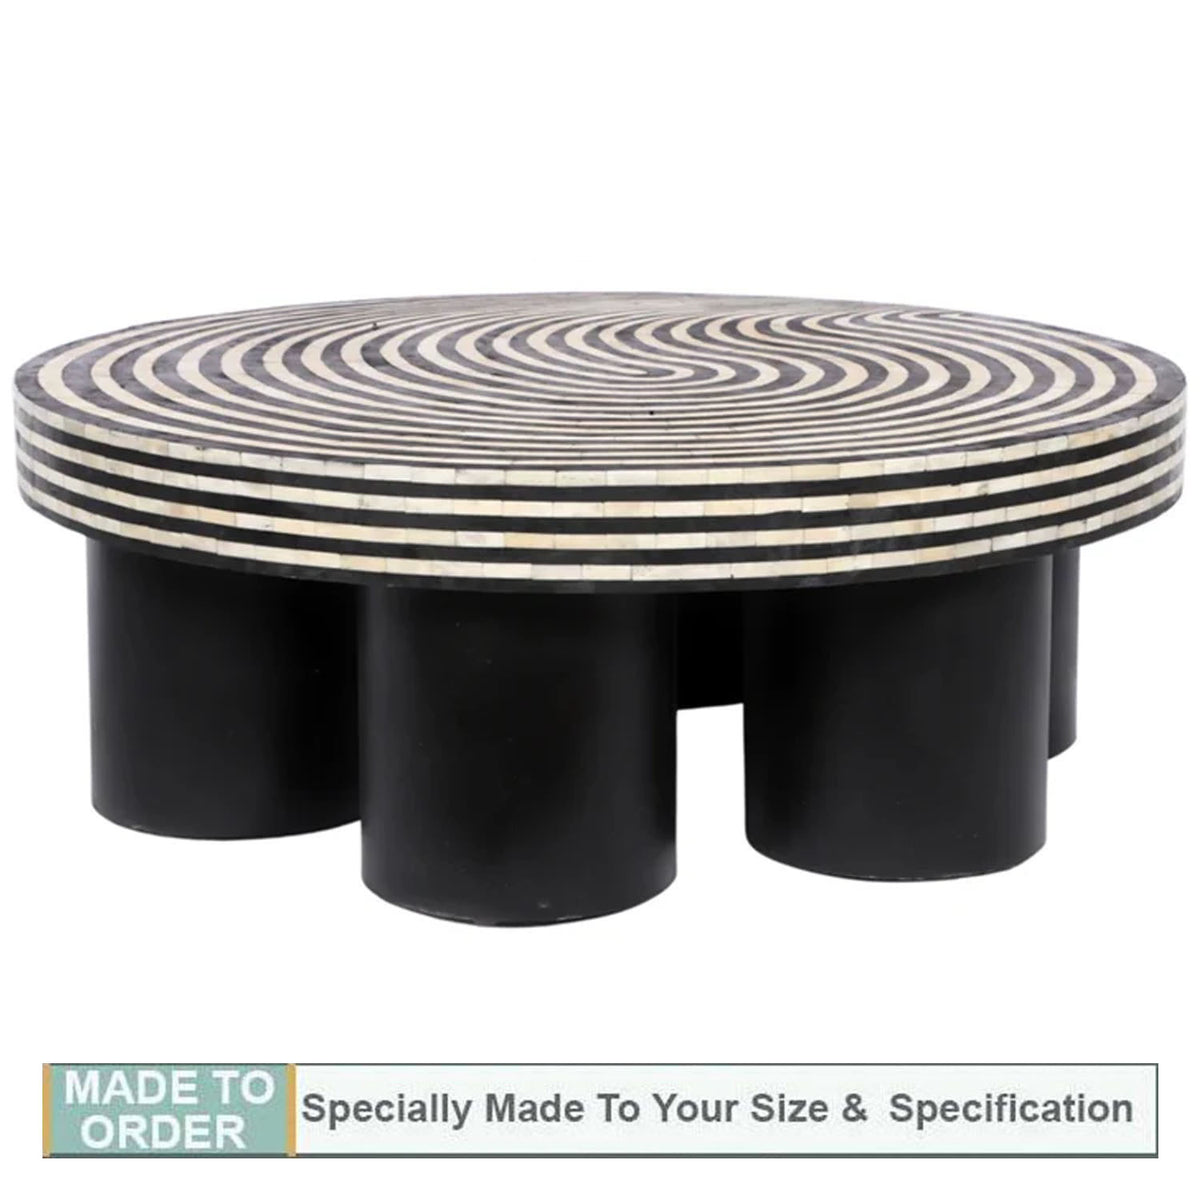 Simsa Bone Inlay Illustrative Design Coffee Table - Black and White - Notbrand